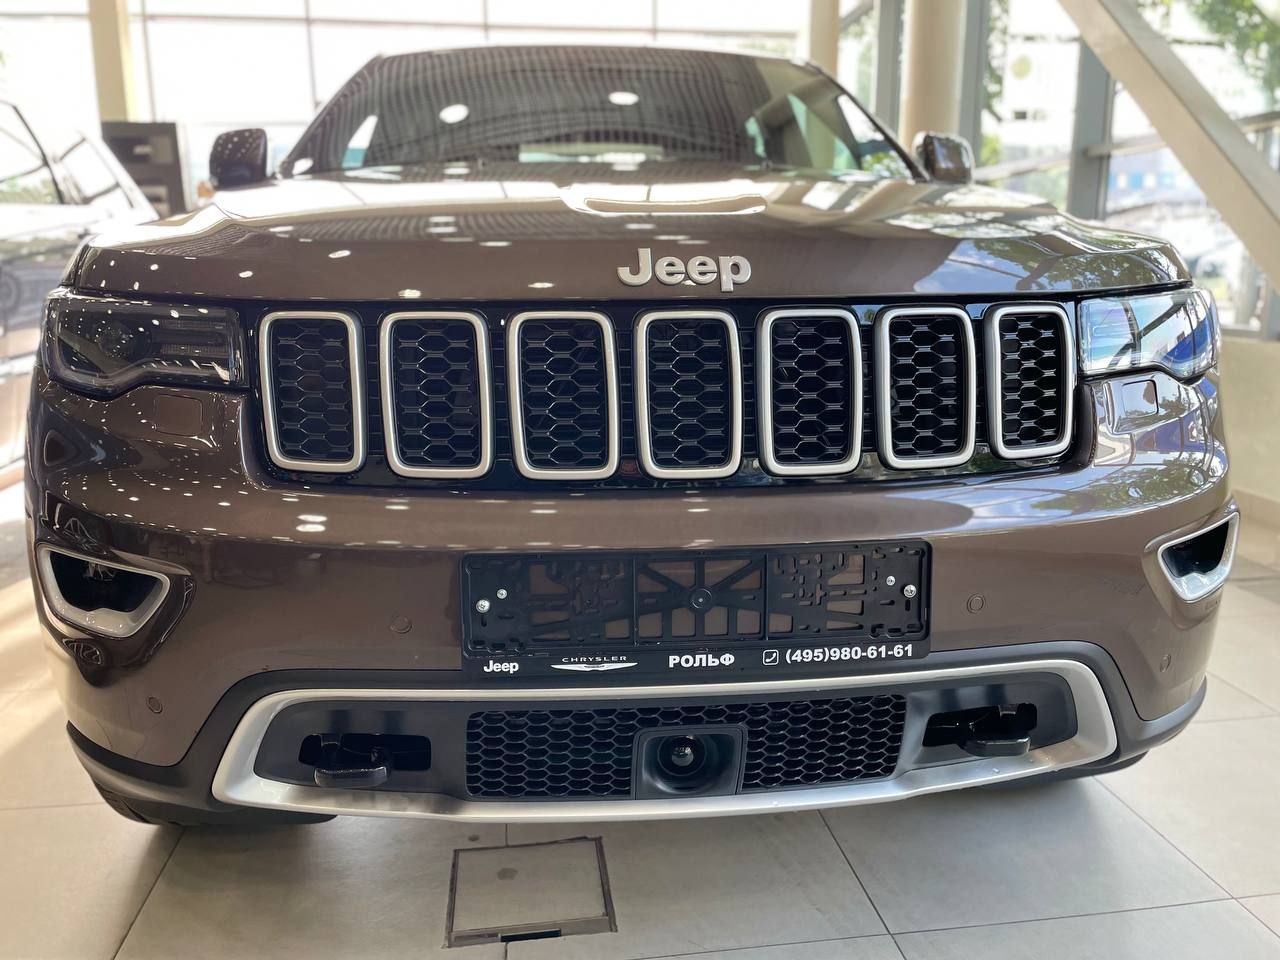 Jeep Grand Cherokee 2021 года, 3л., Приветствую всех, Екатеринбург,  автомат, расход 9.0, тип кузова SUV, бензин